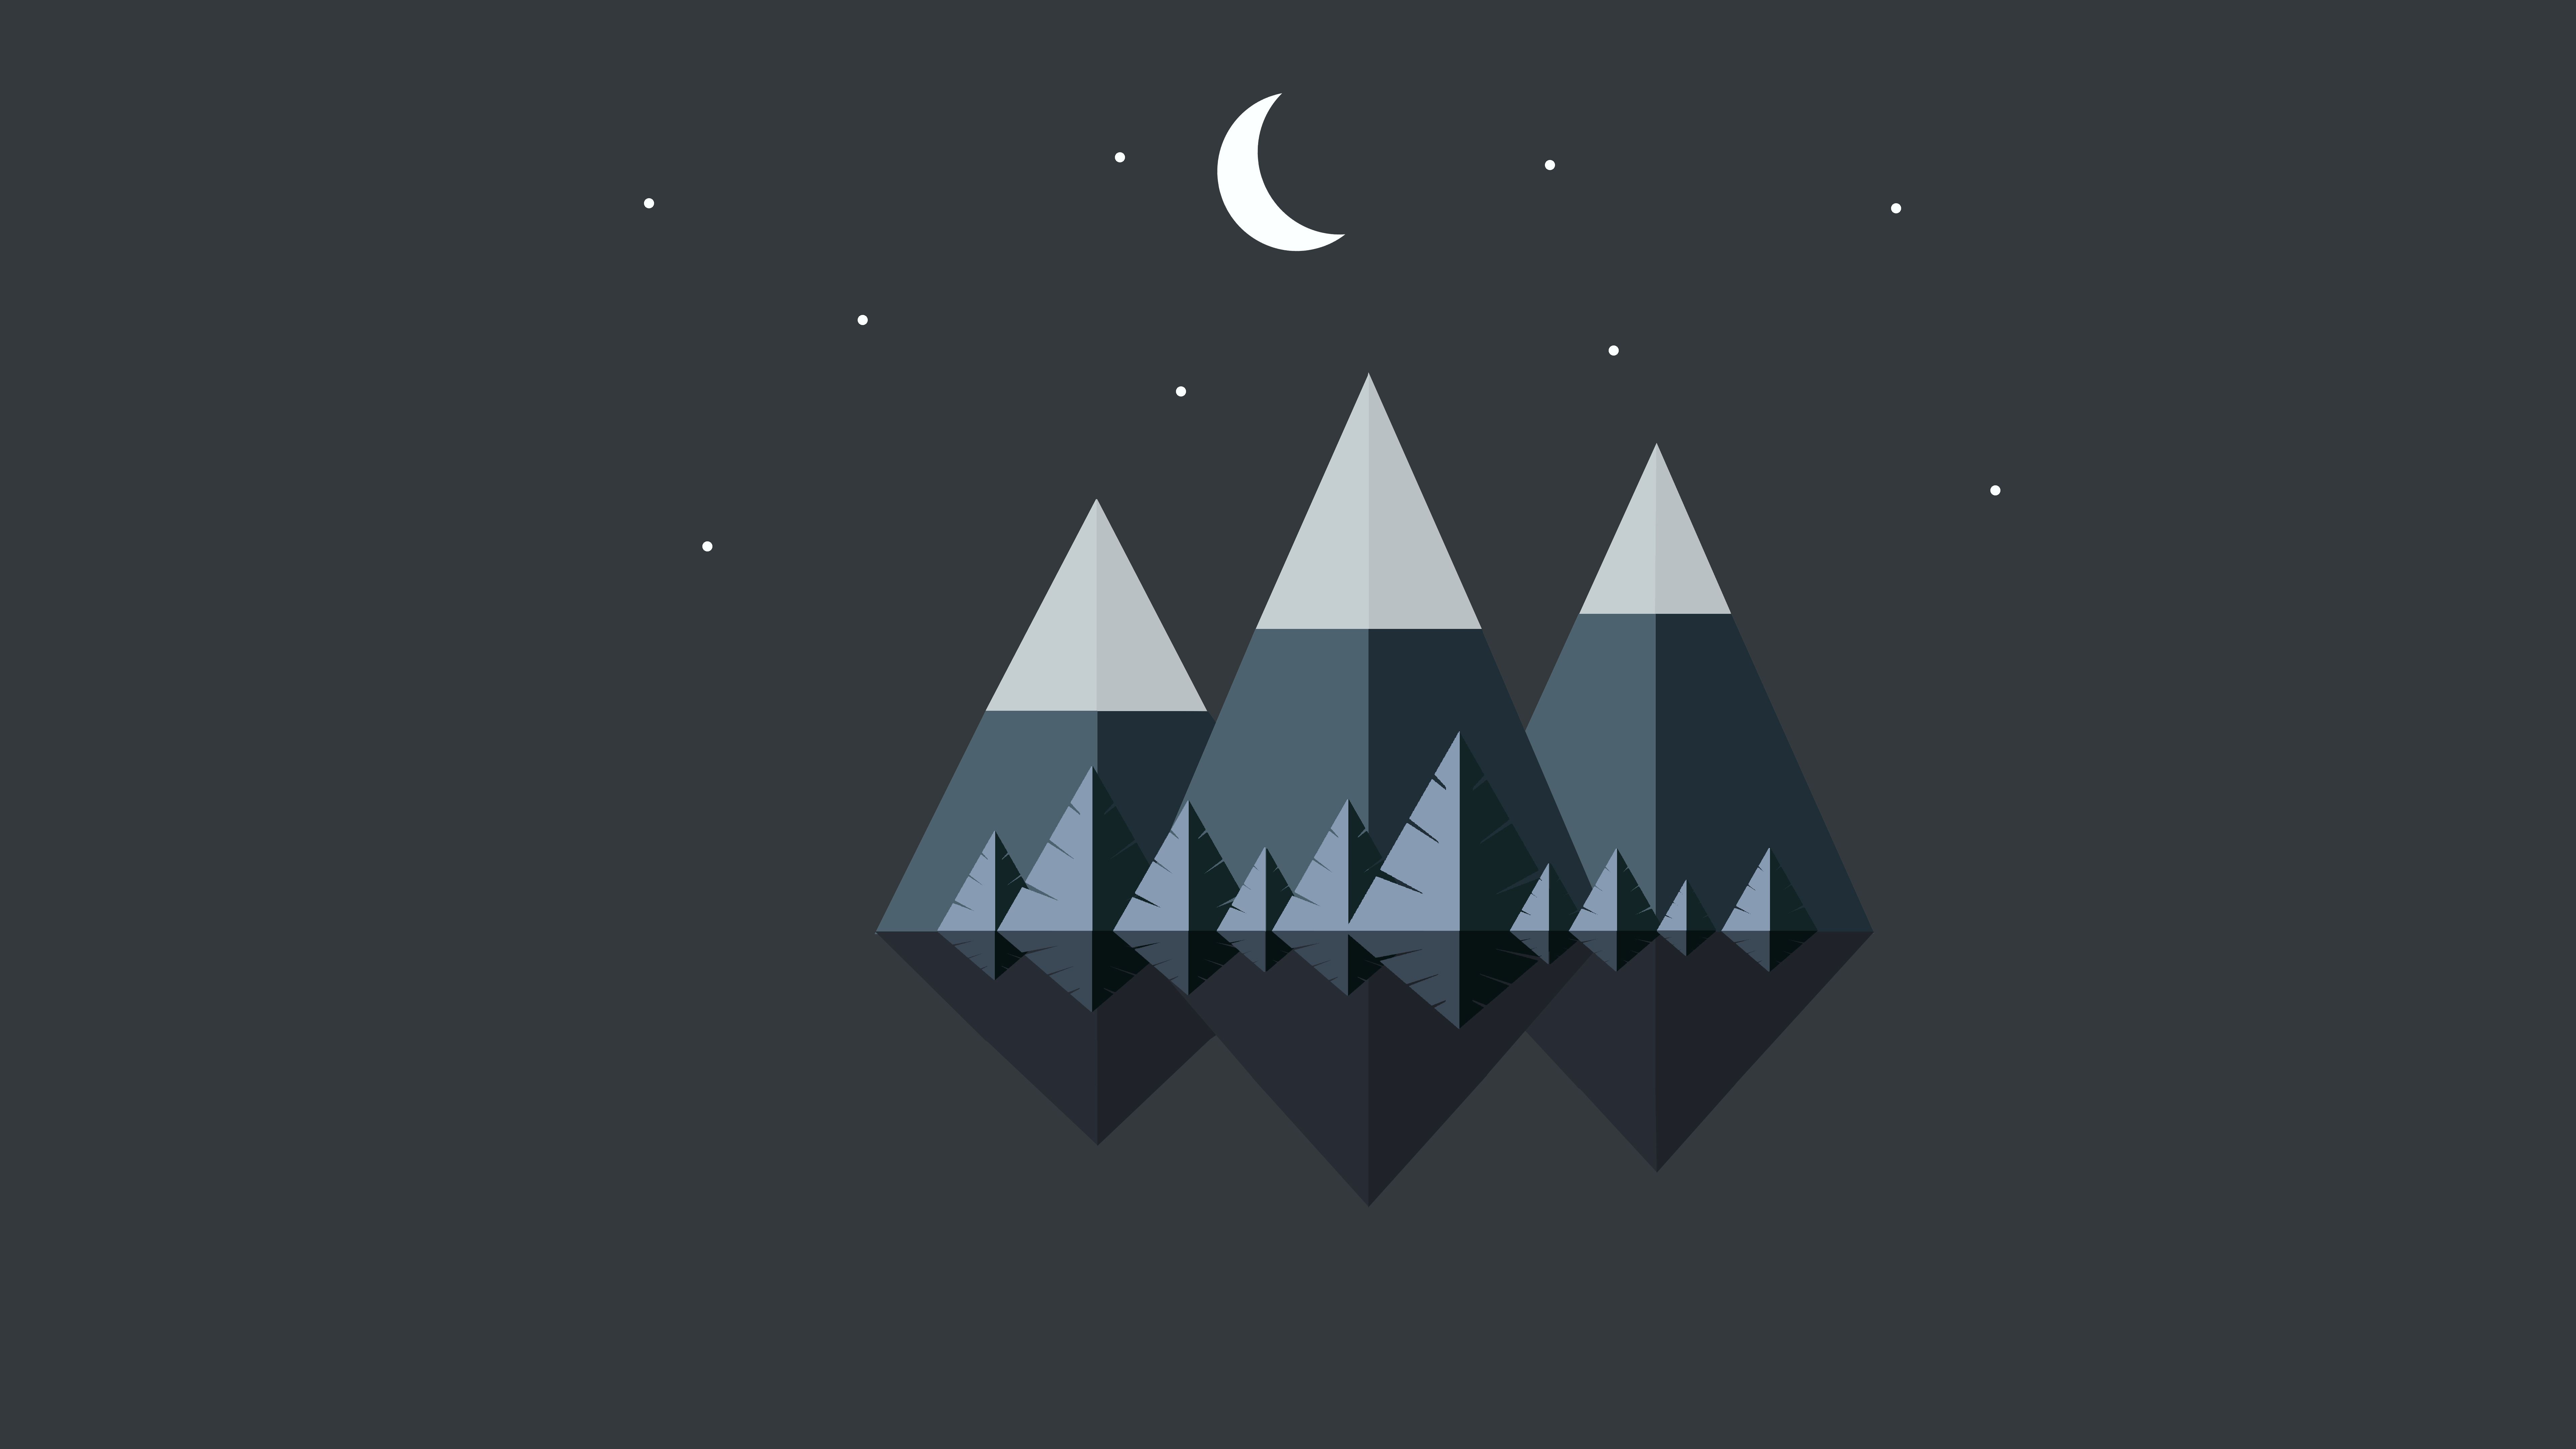 Minimal Mountains At Night Wallpaper, HD Artist 4K Wallpaper, Image, Photo and Background